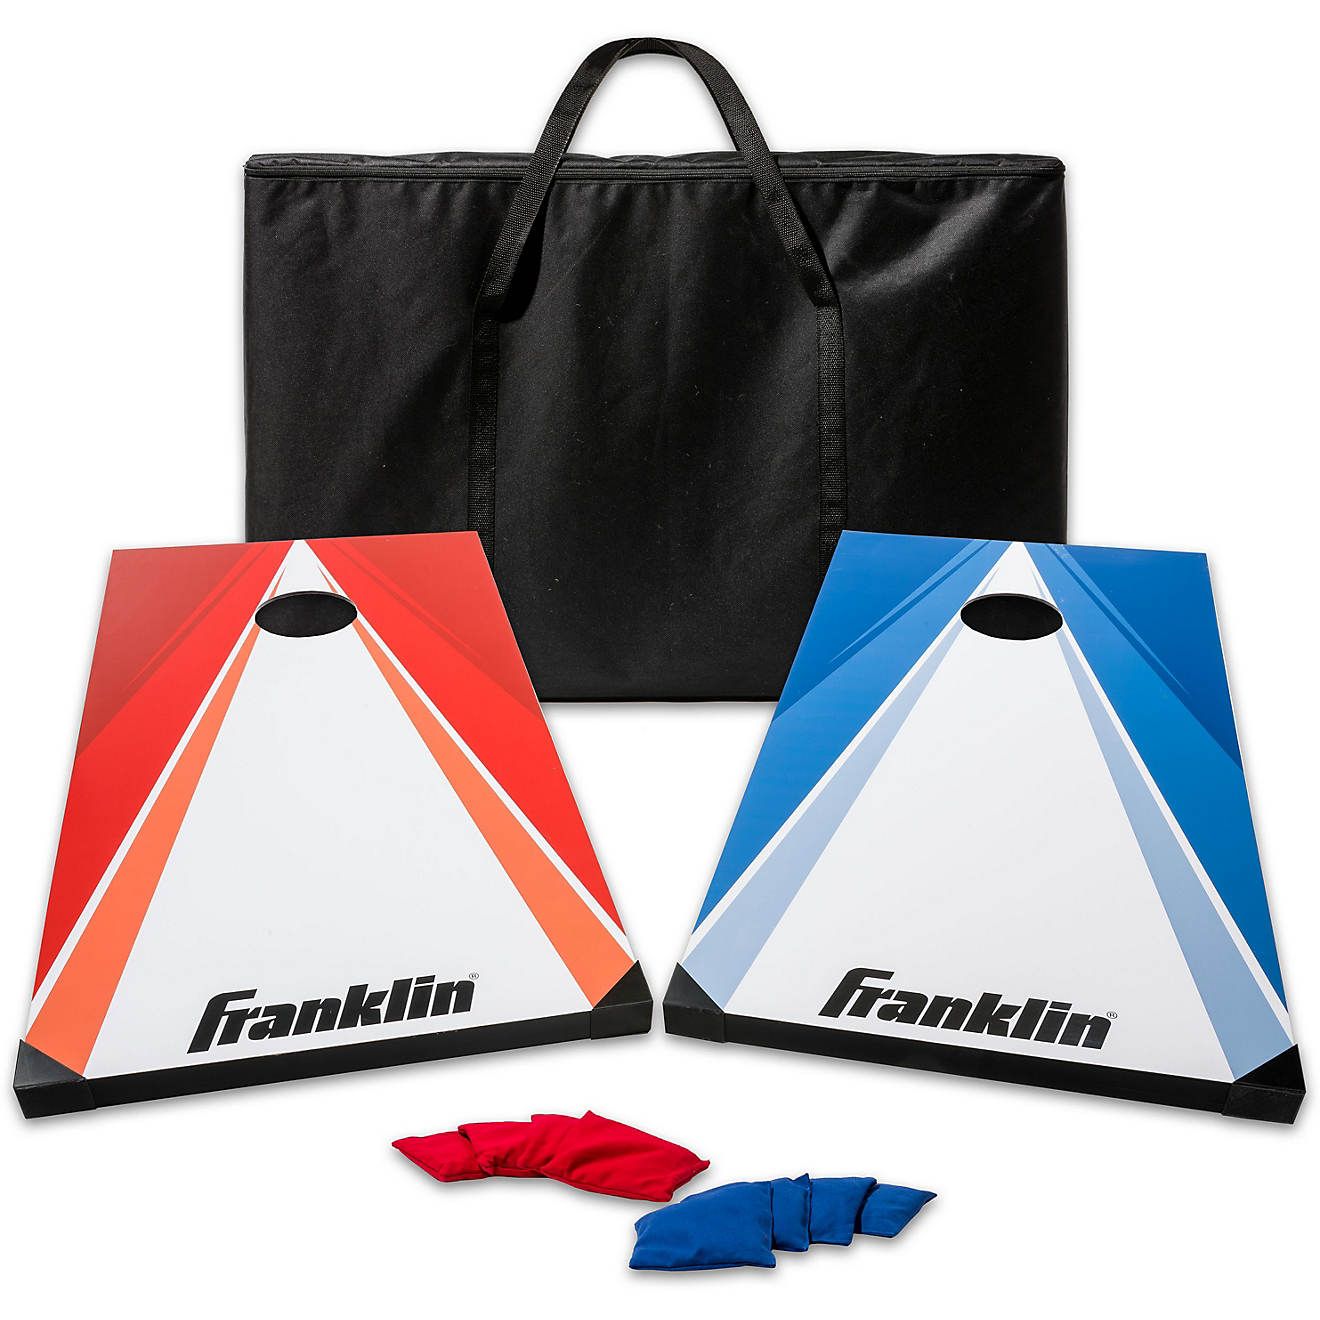 Franklin Professional Cornhole Set | Academy Sports + Outdoor Affiliate